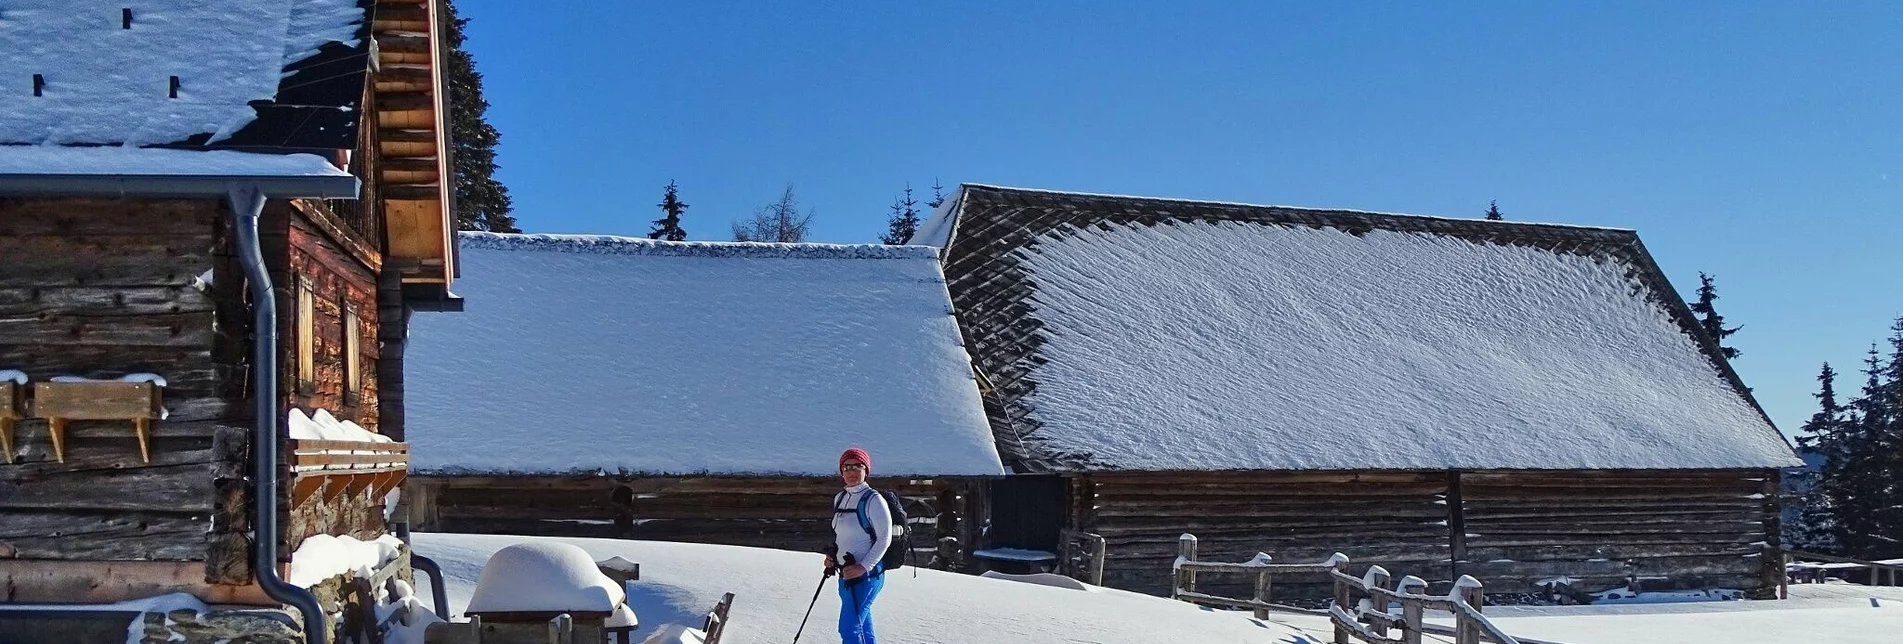 Snowshoe walking Moar-in-Pichl hut in the Gleinalpen area - Touren-Impression #1 | © Weges OG